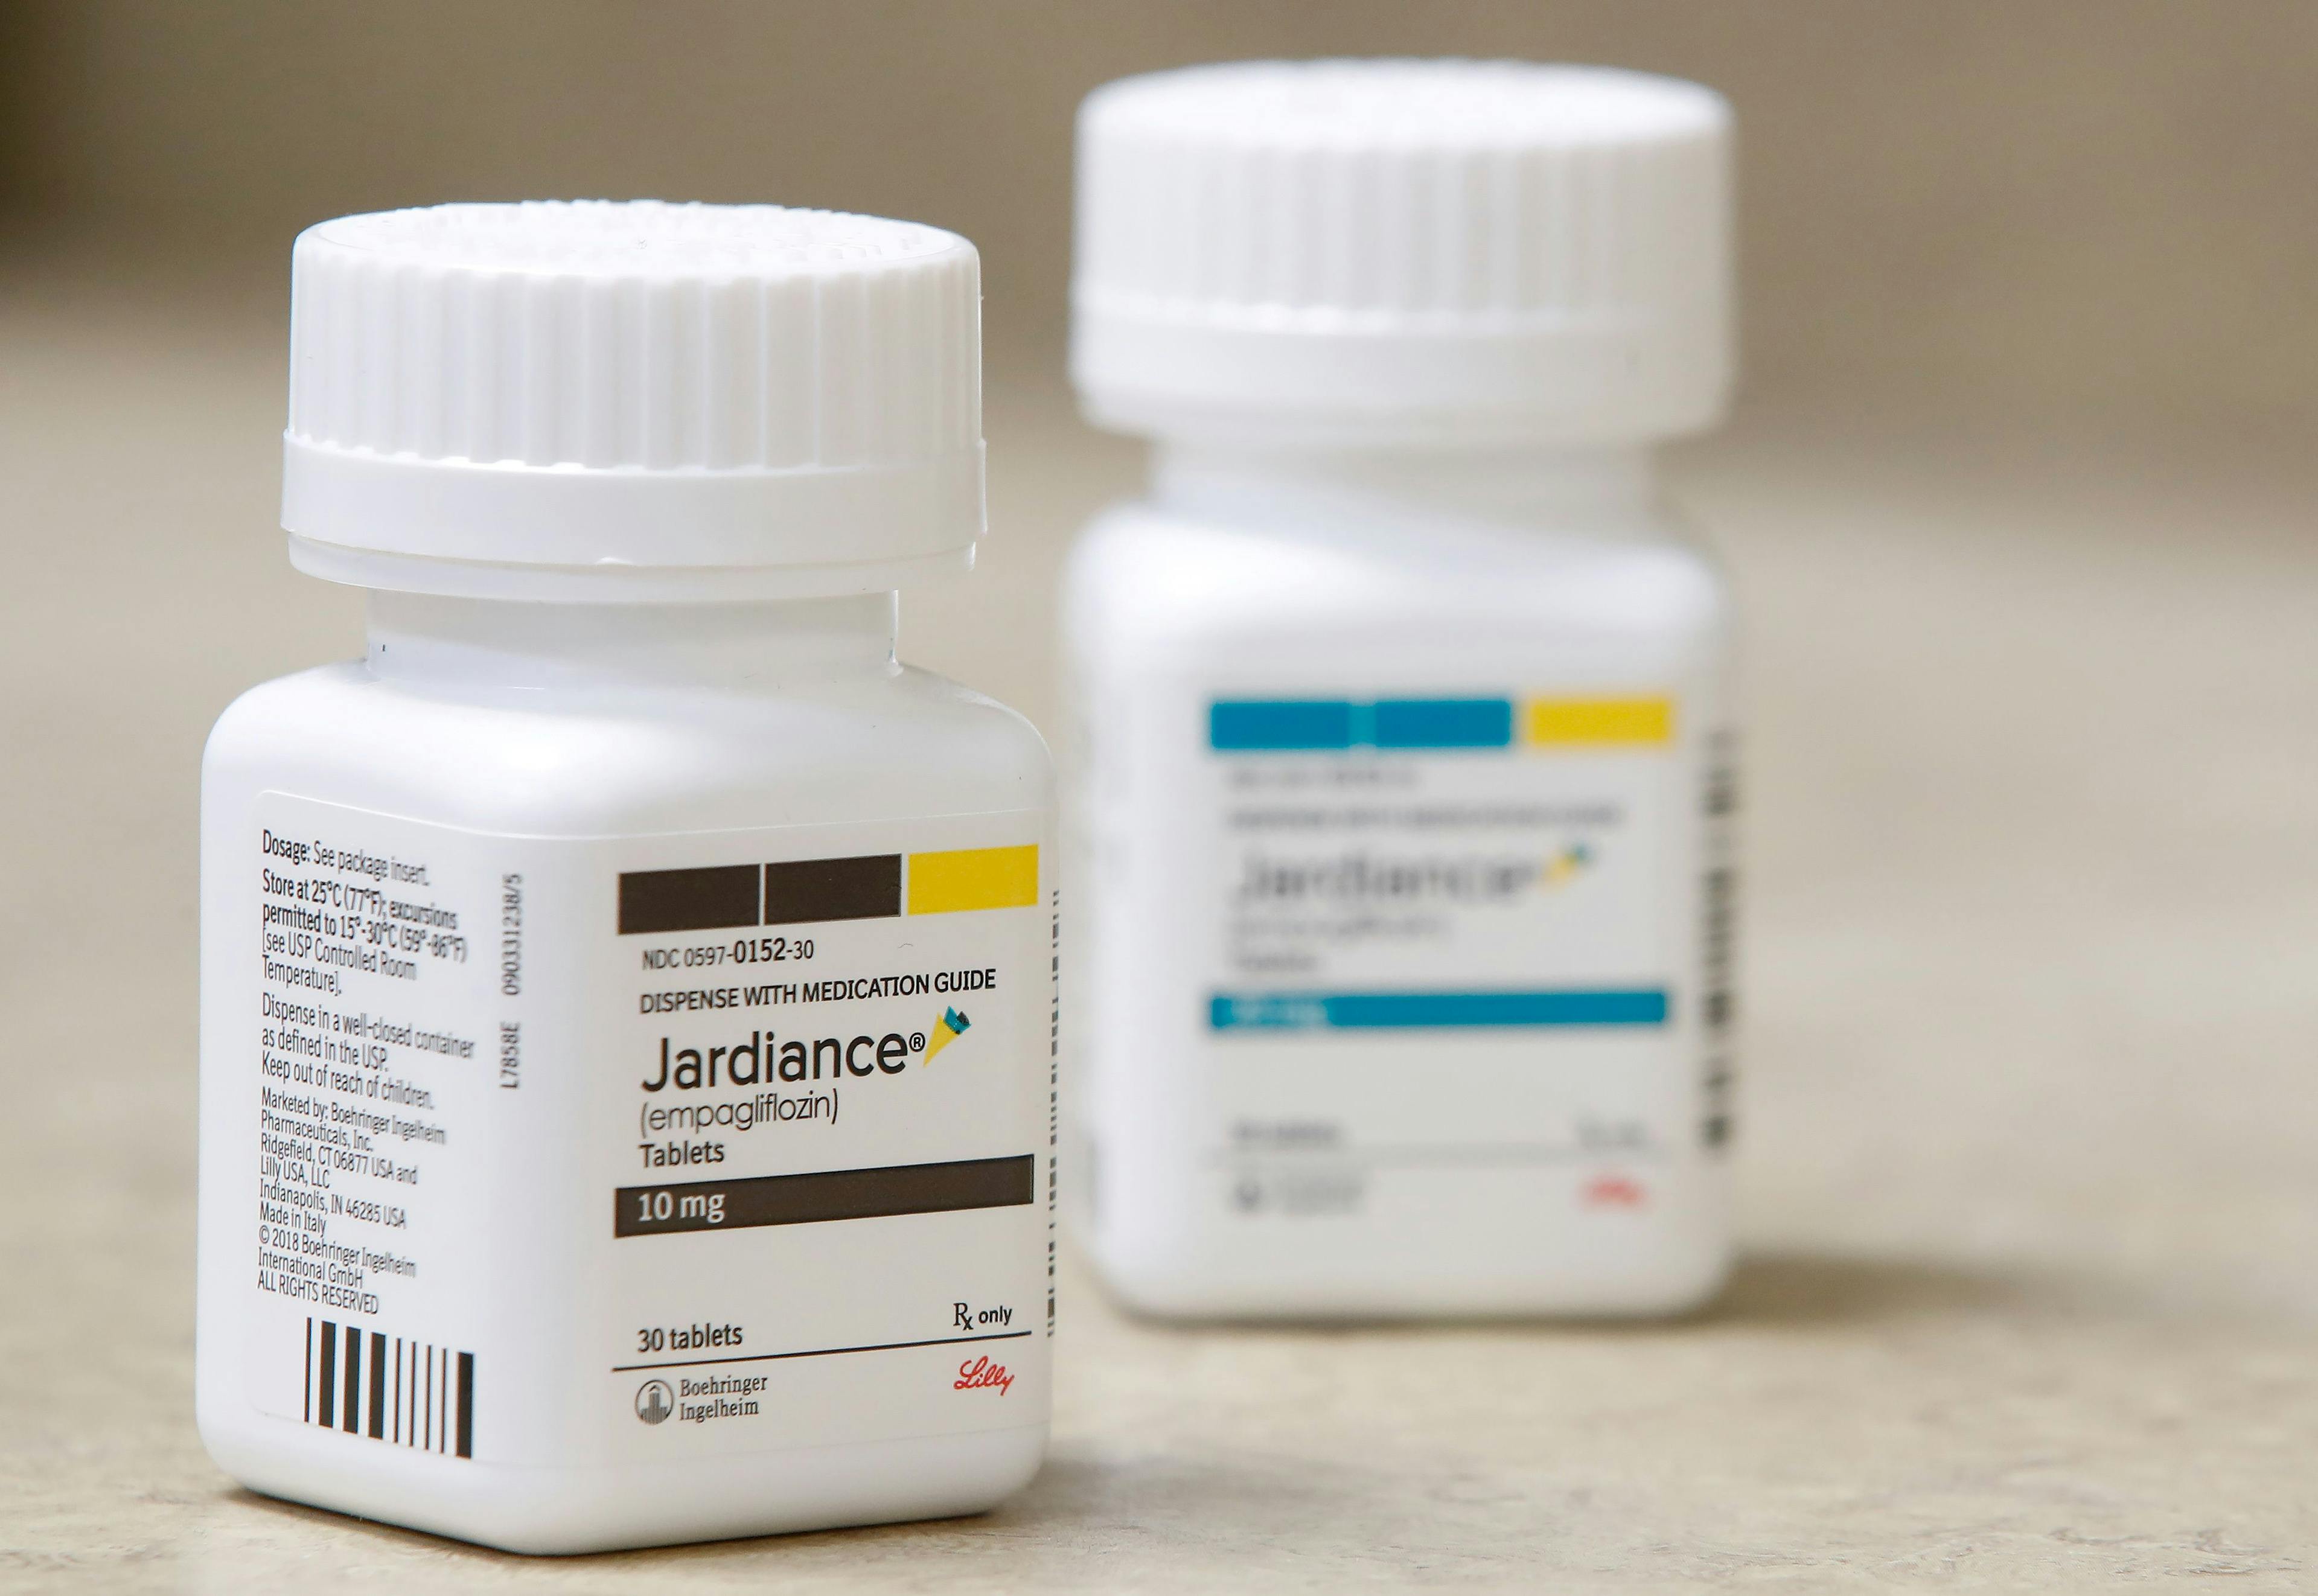 Empagliflozin (Jardiance) prescription bottles